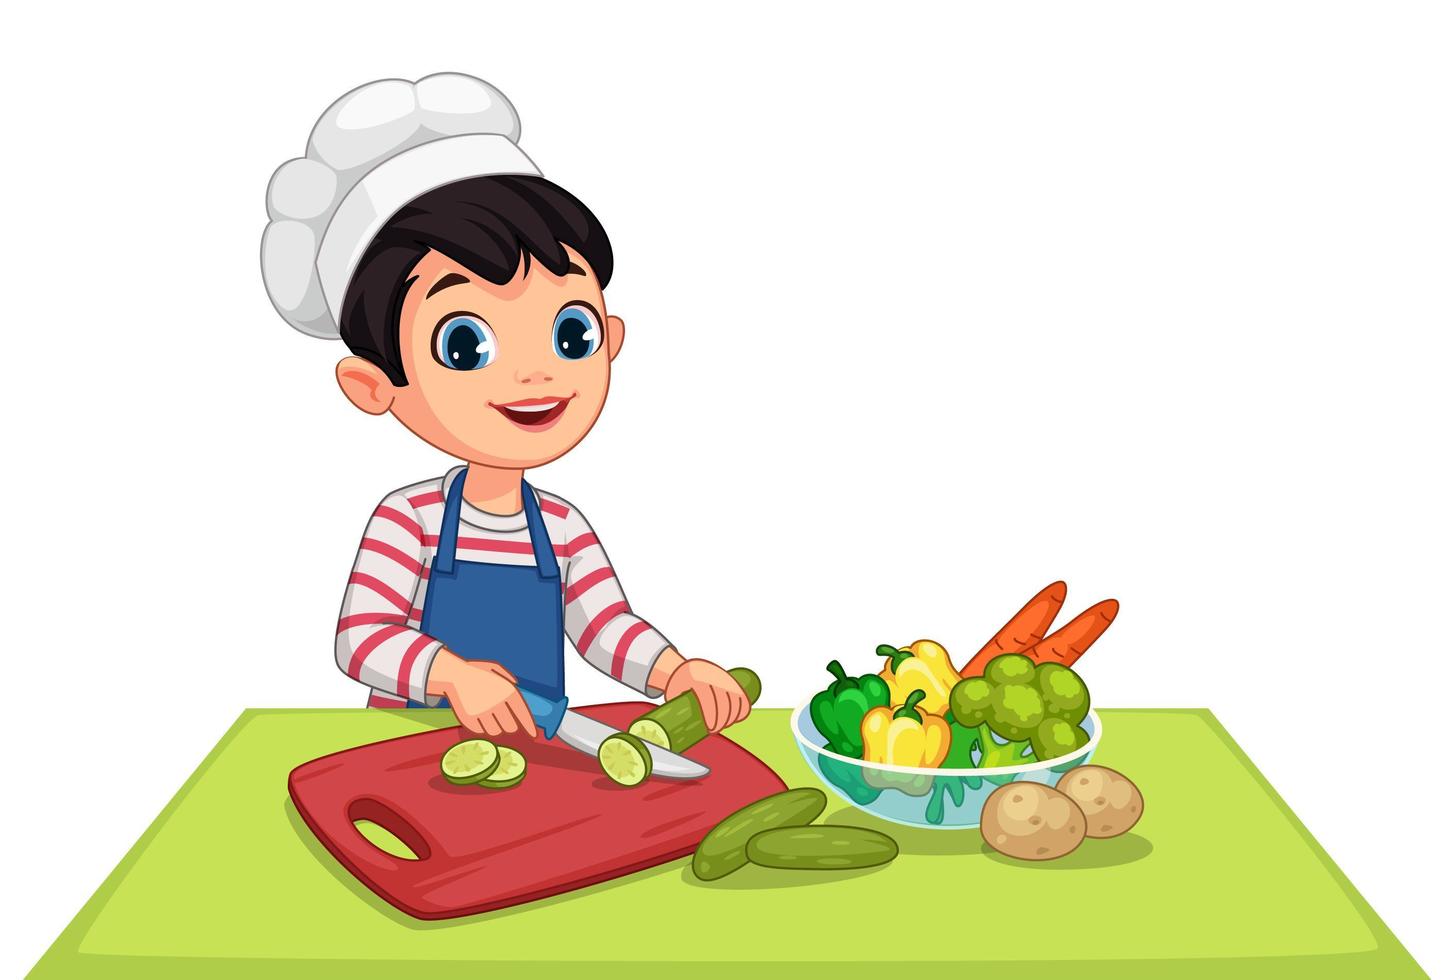 Cute little boy cutting vegetables Download Free Vectors